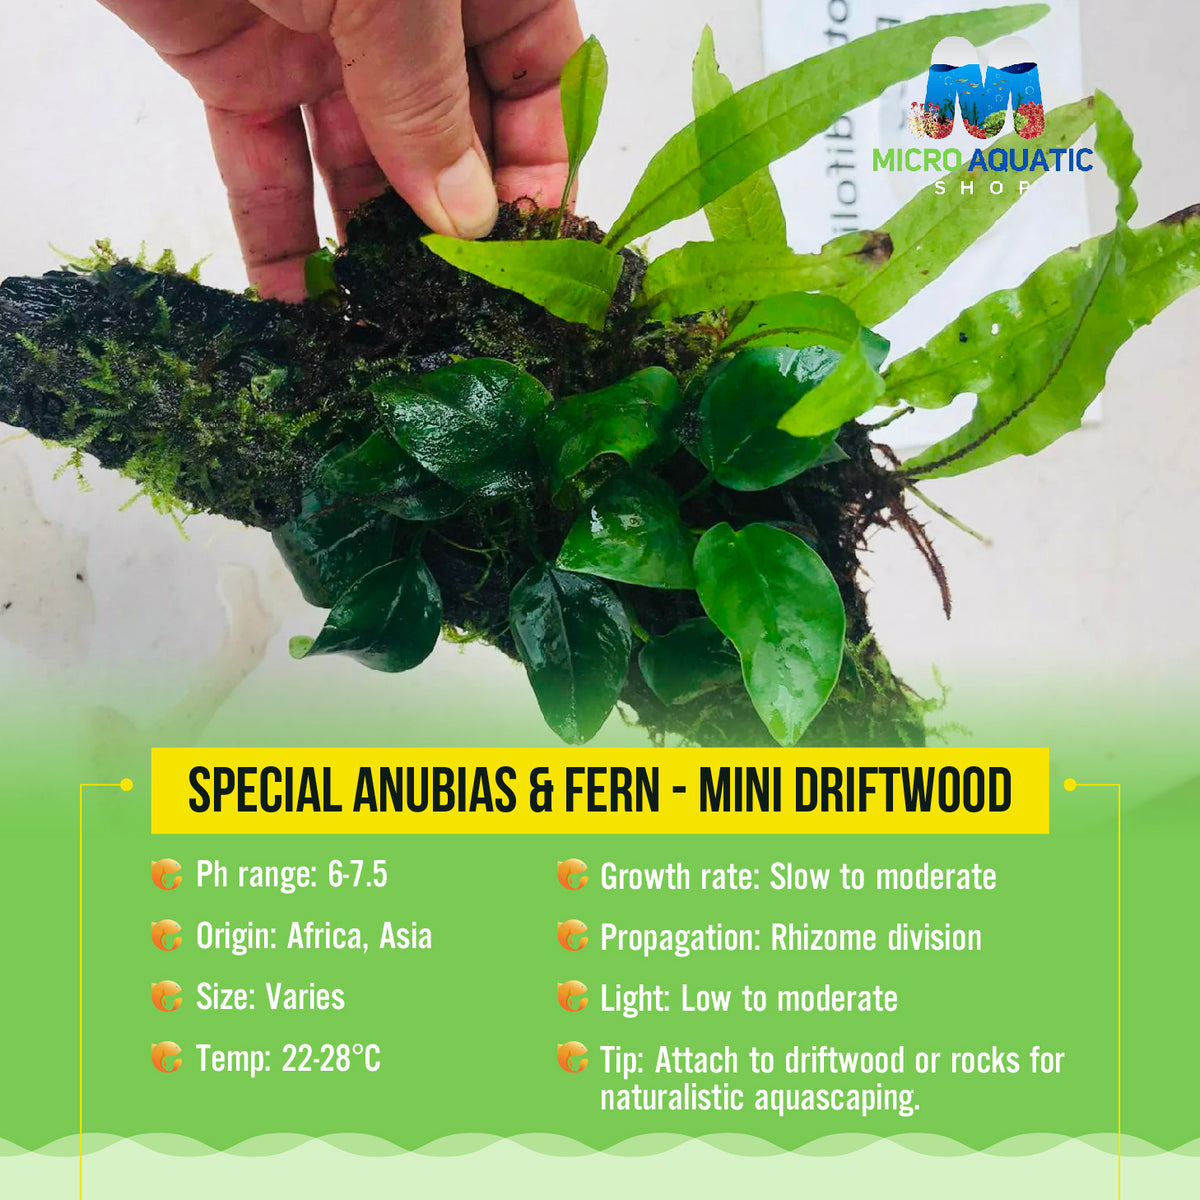 Special Anubias & Fern - Mini Driftwood